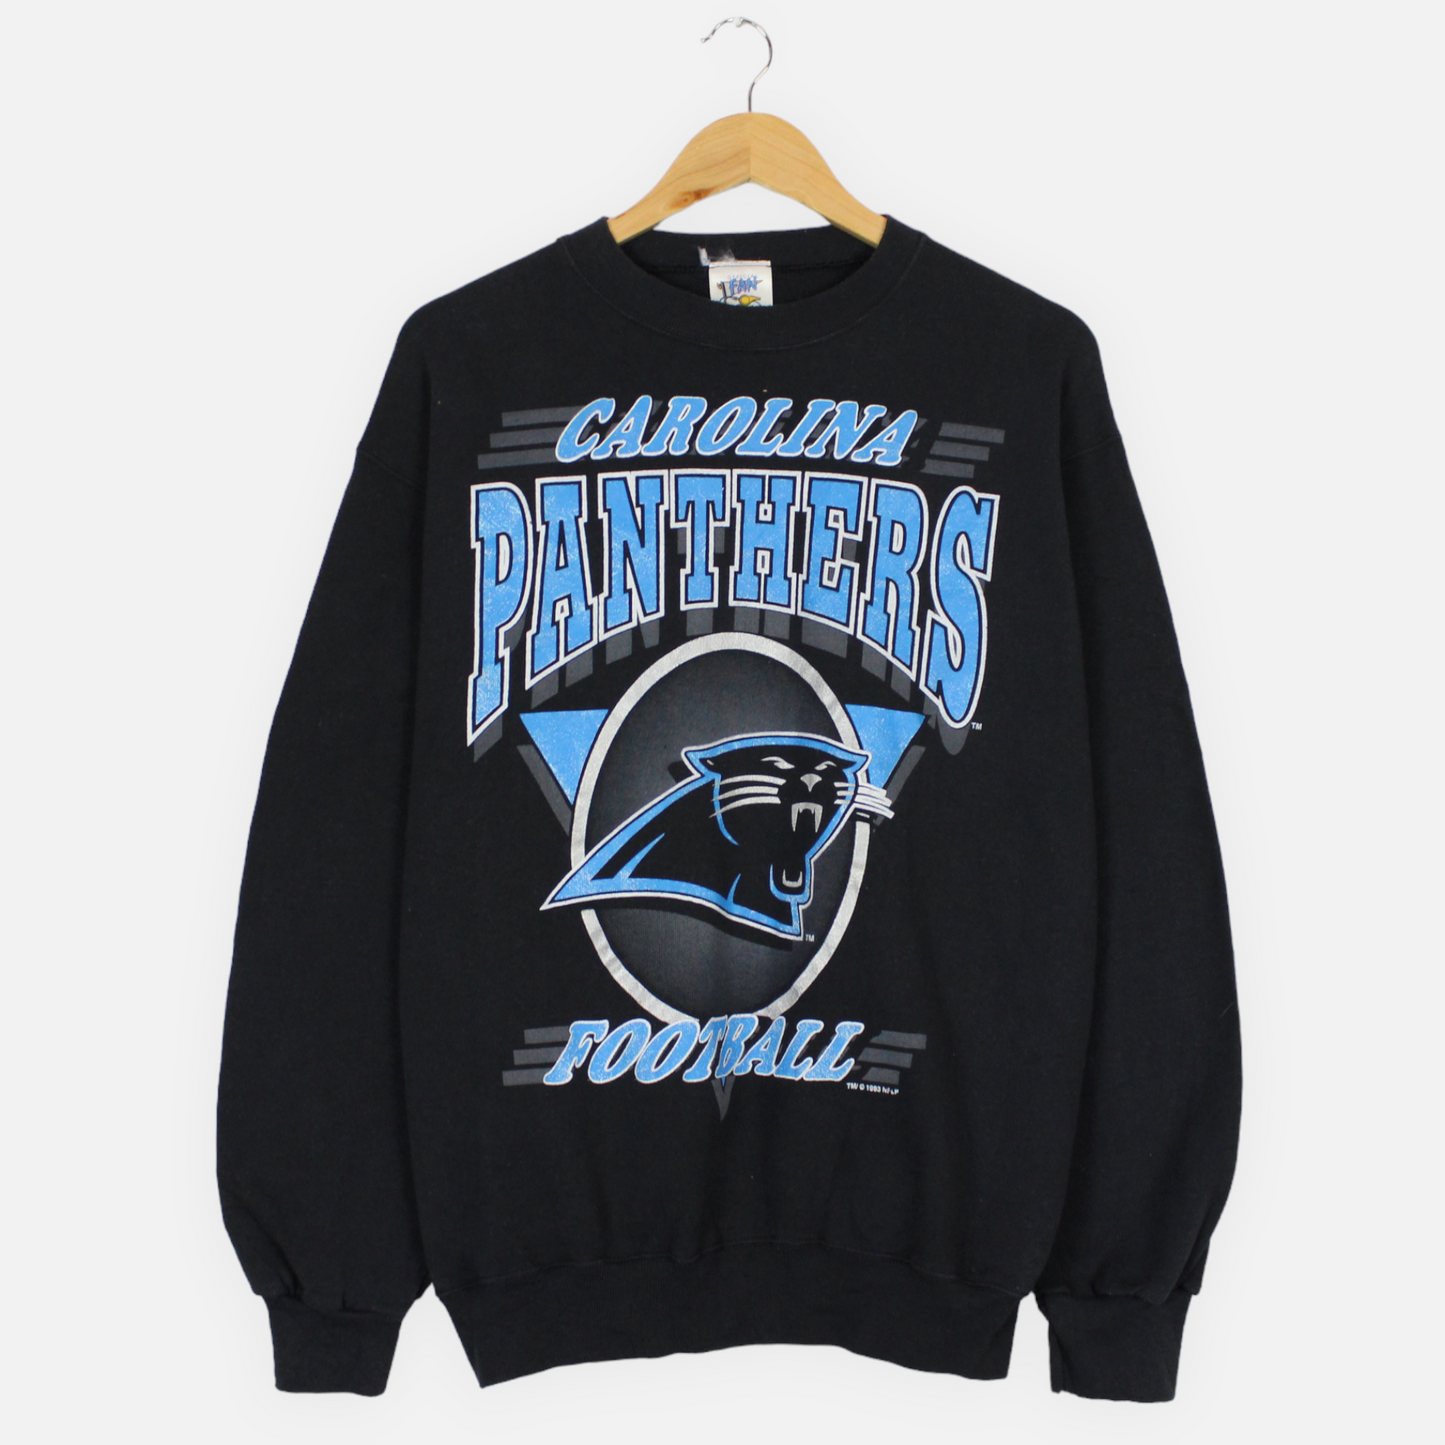 Vintage 1993 Carolina Panthers NFL Sweatshirt - L